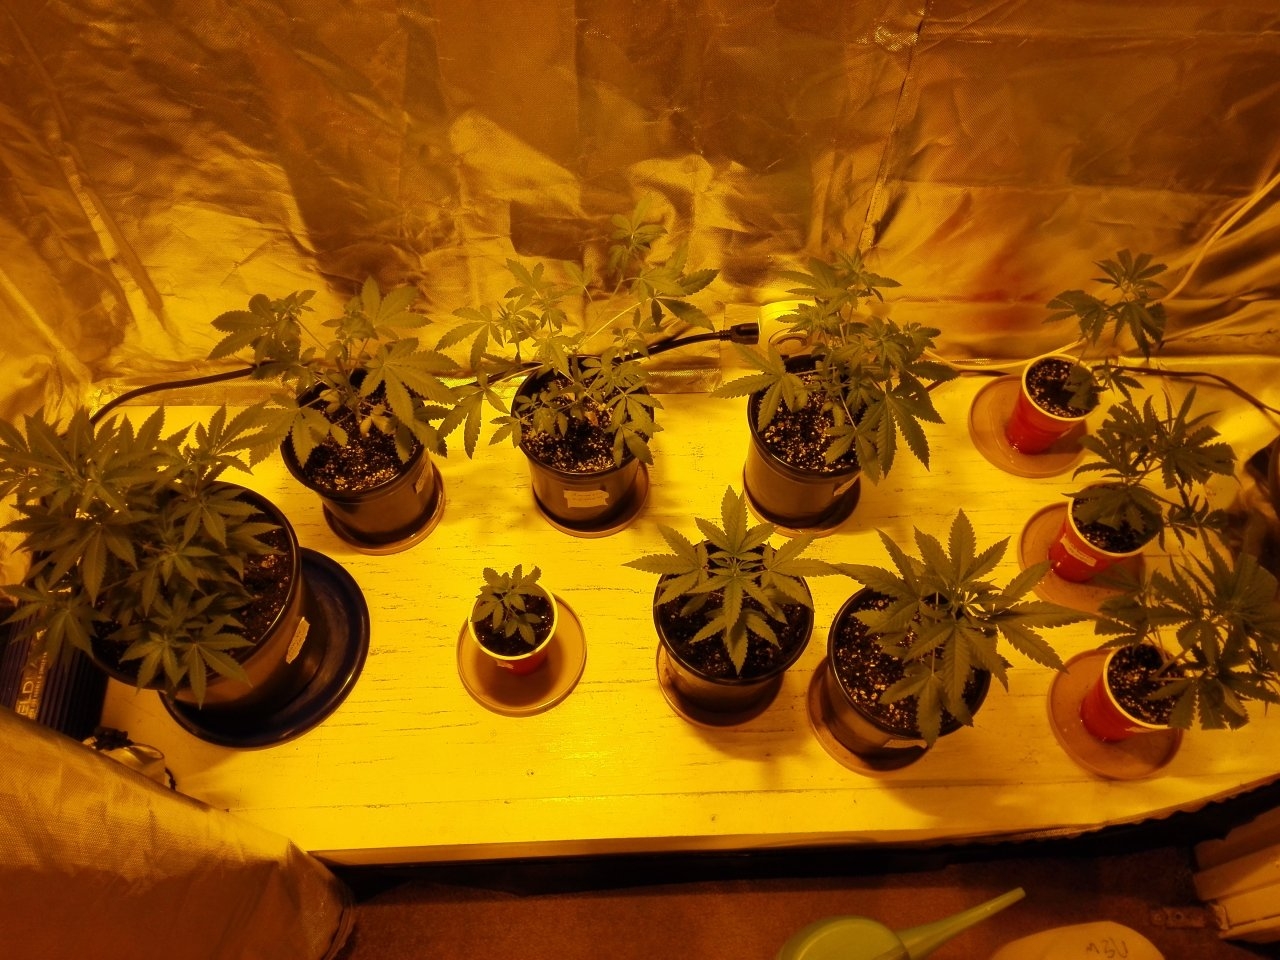 Seedlings and clones being fed